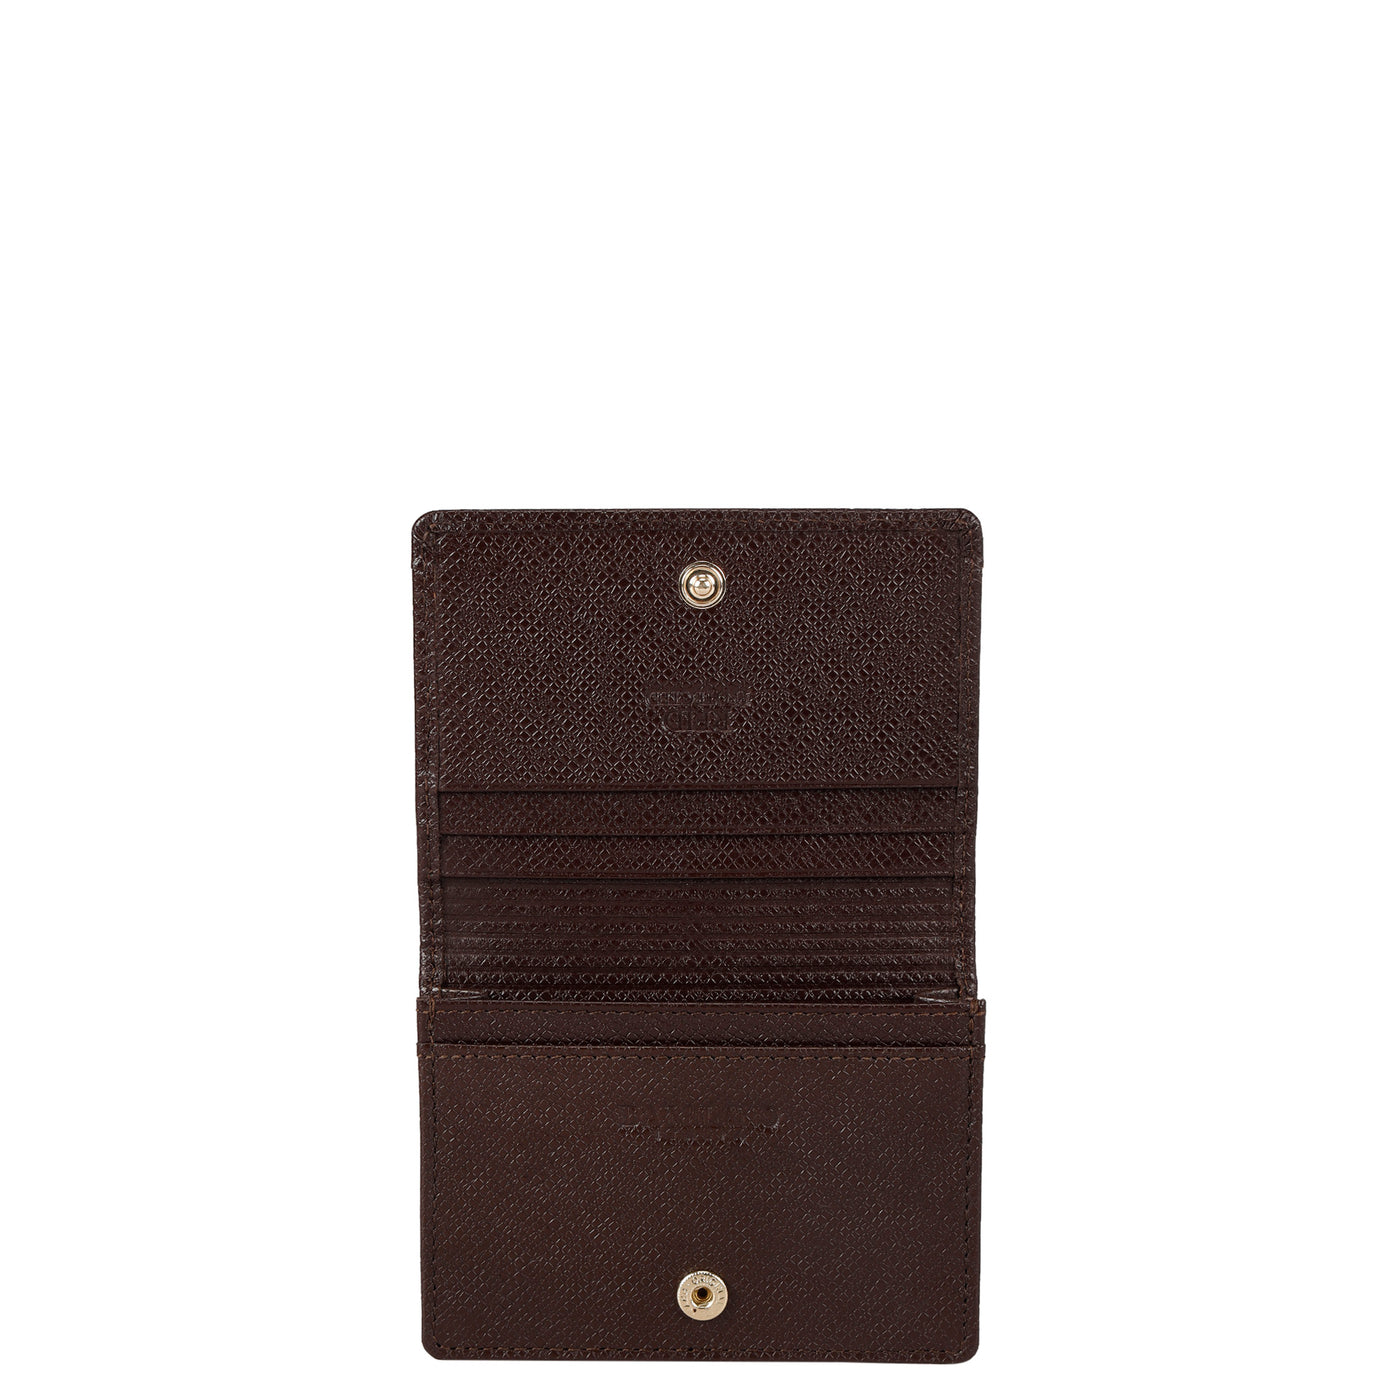 Franzy Croco Leather Card Case - Chocolate